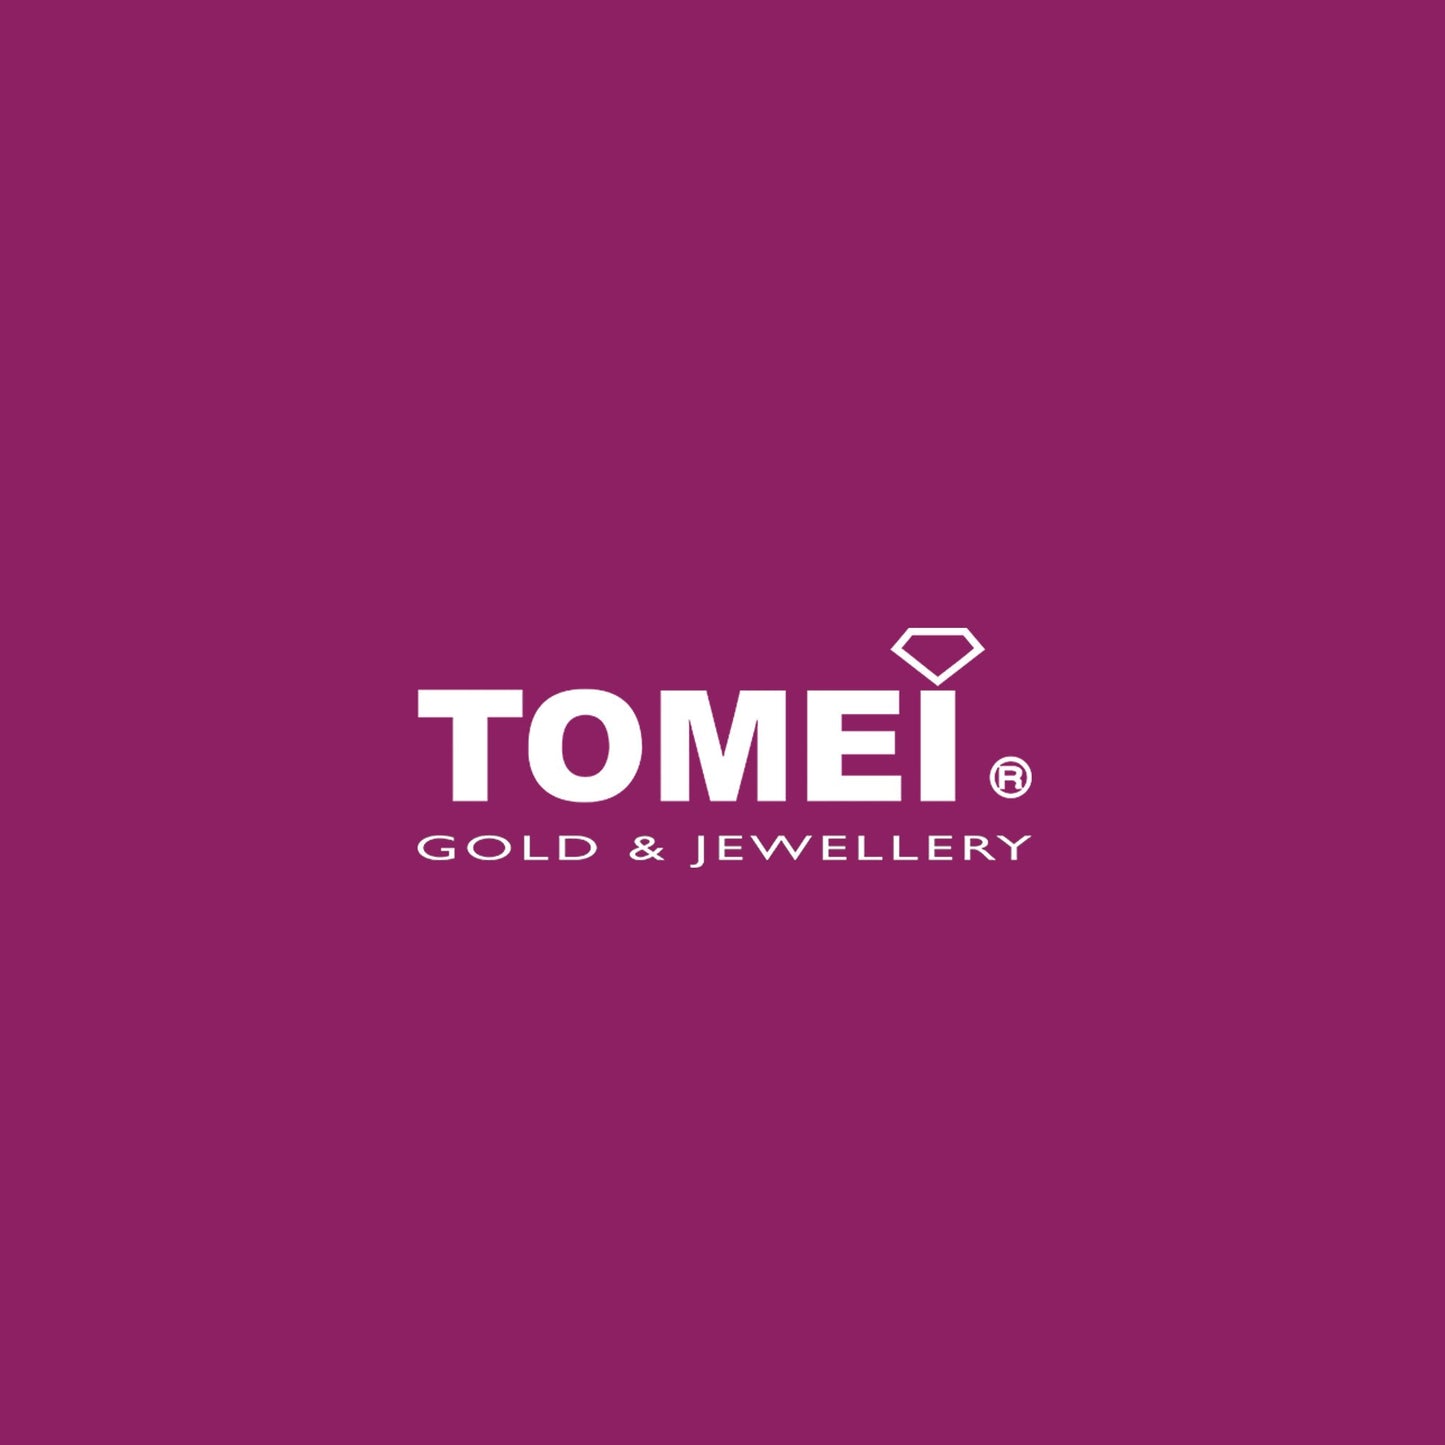 TOMEI Sweet Embrace Earrings, White Gold 585 (E2150)